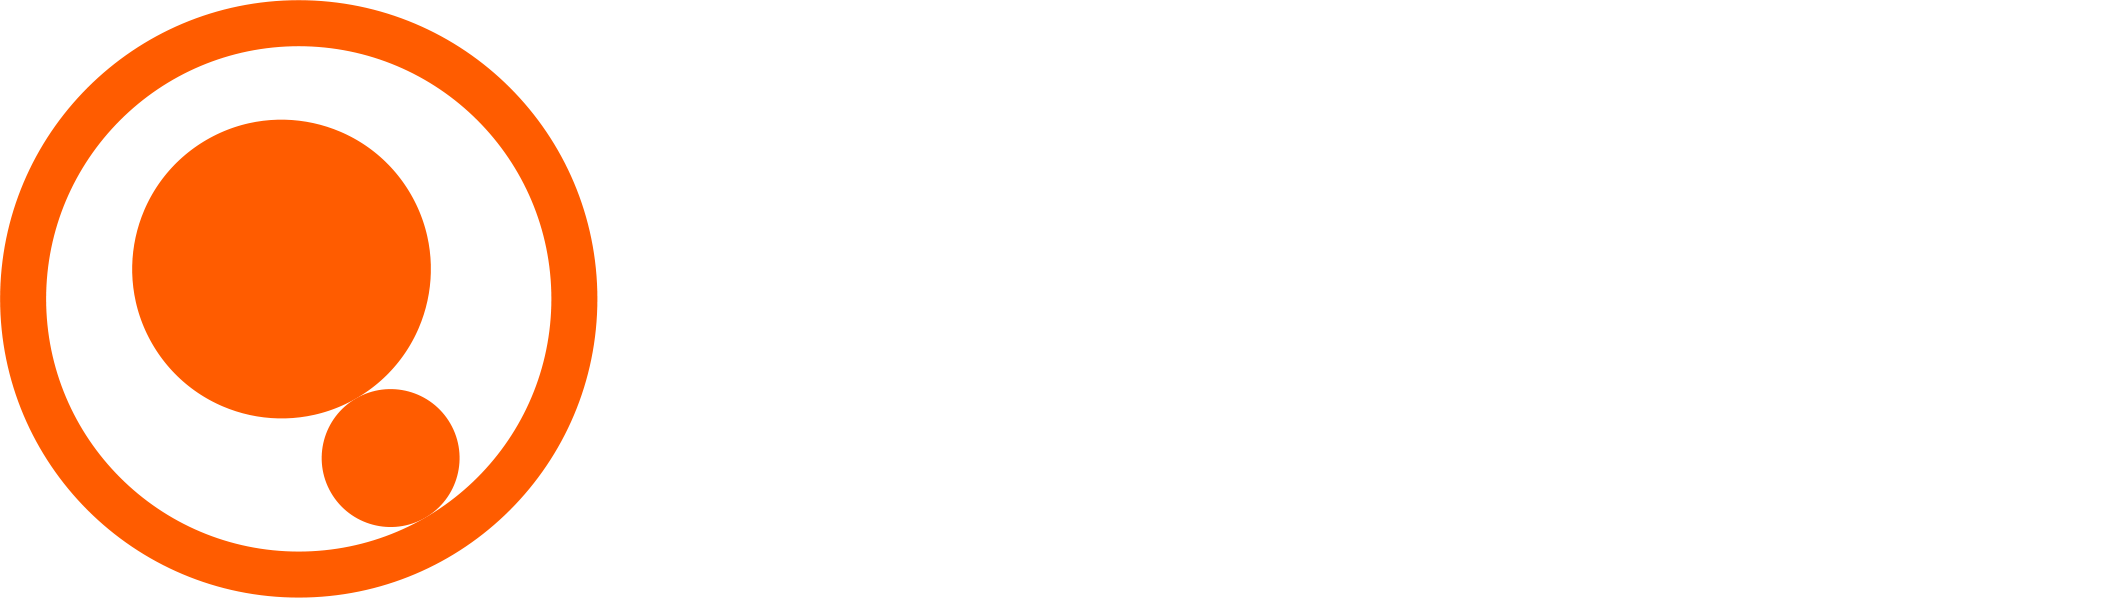 Inbalance grid